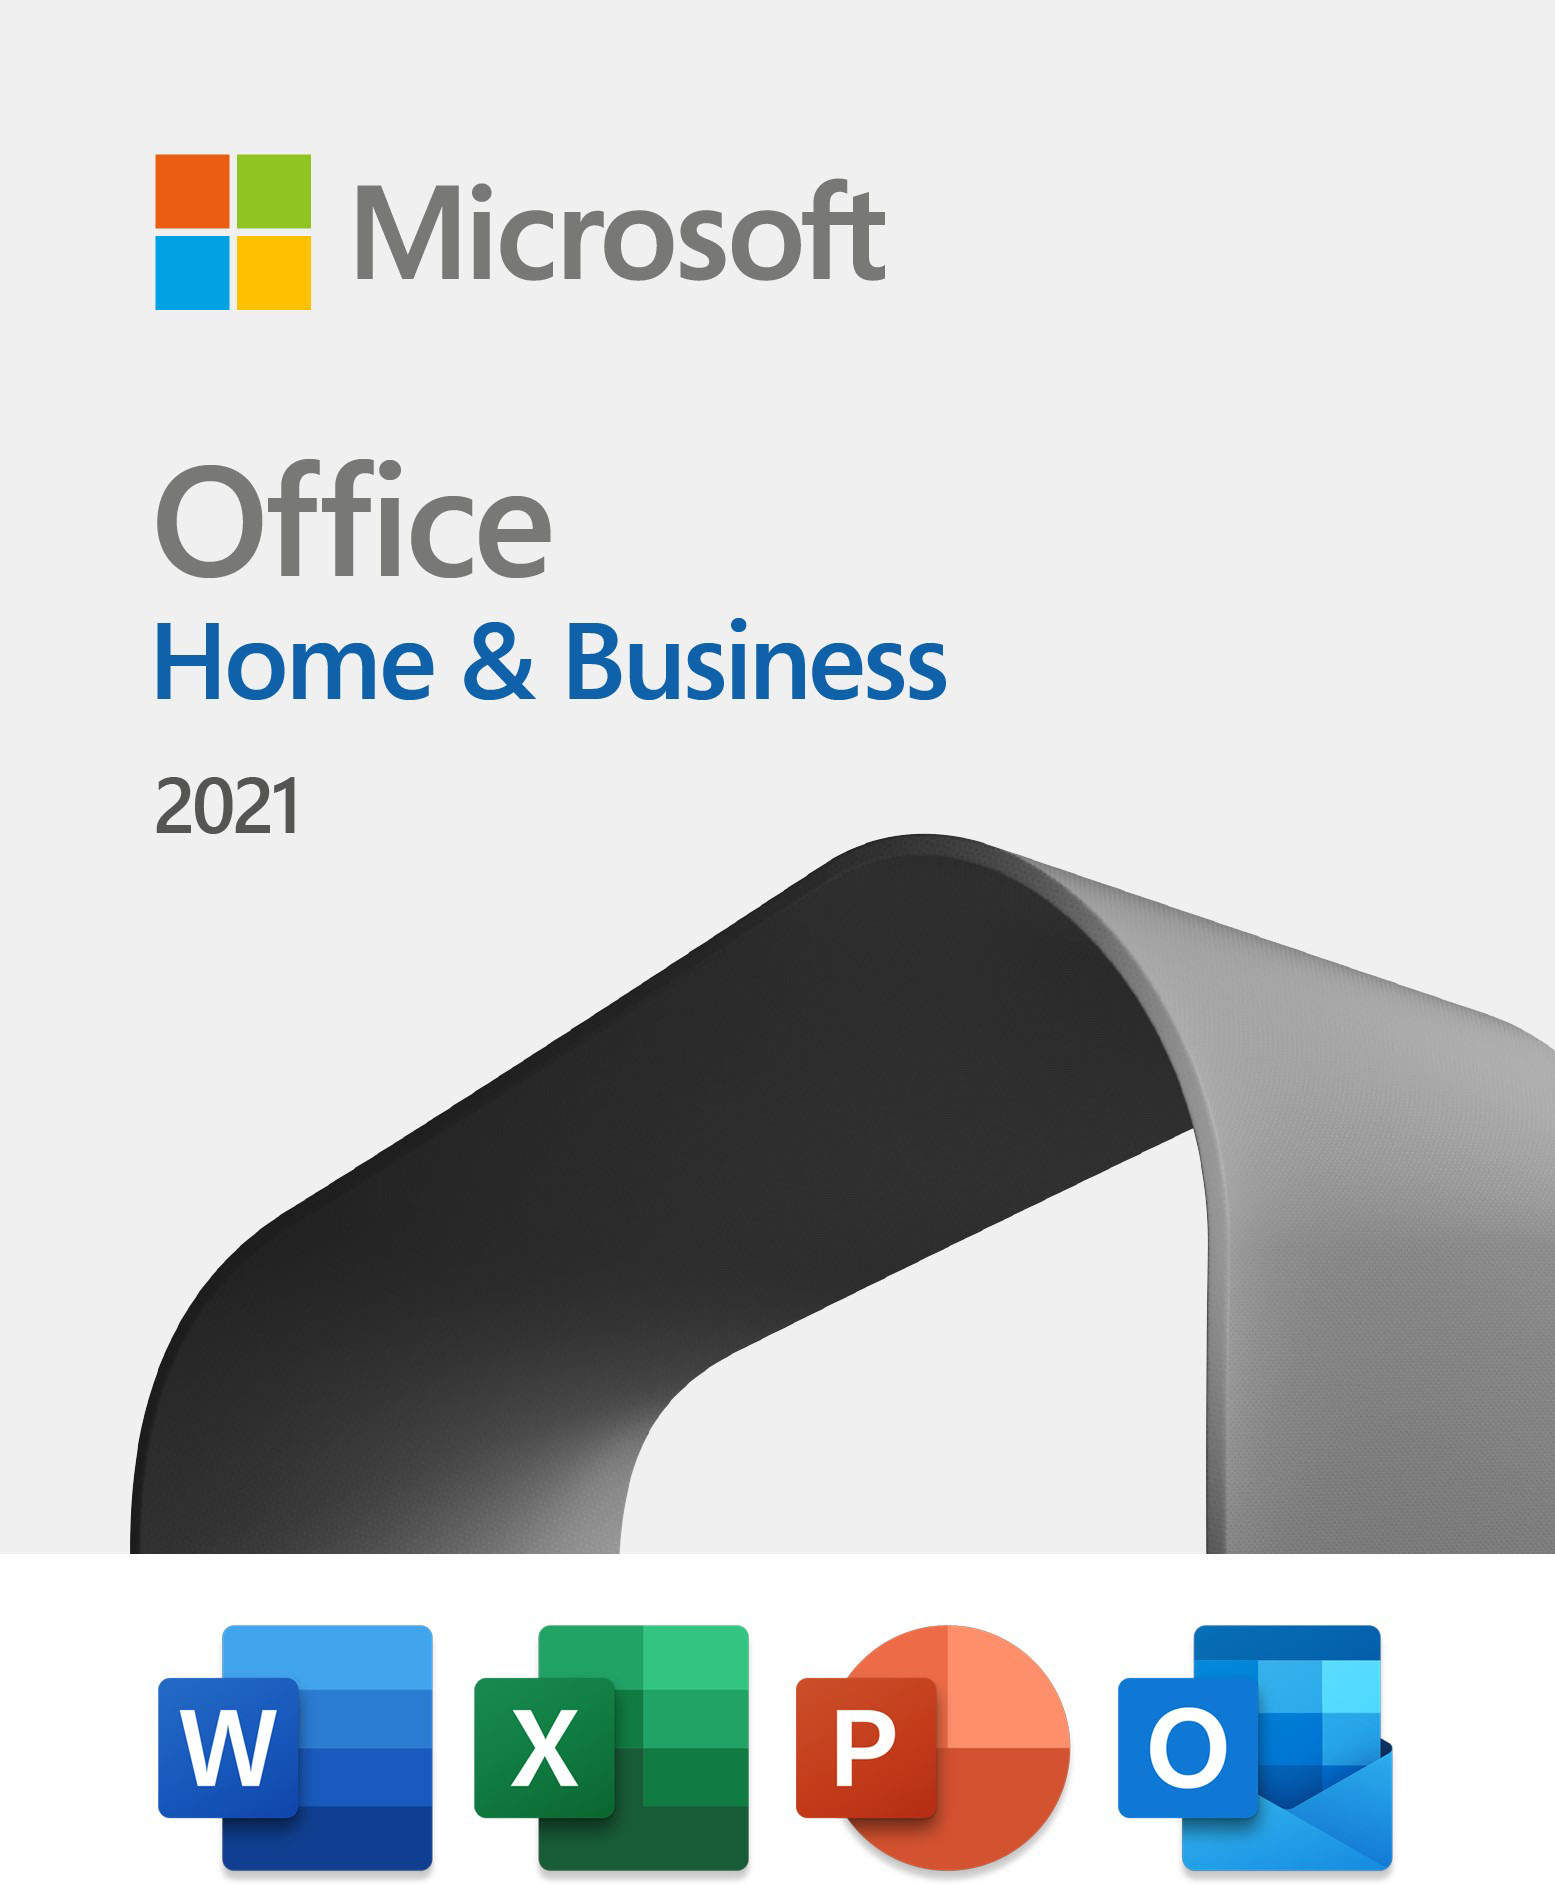 Microsoft Office Home & Business [Digital] T5D-03489 - Buy Windows Best (1 Mac 2021 Device) OS